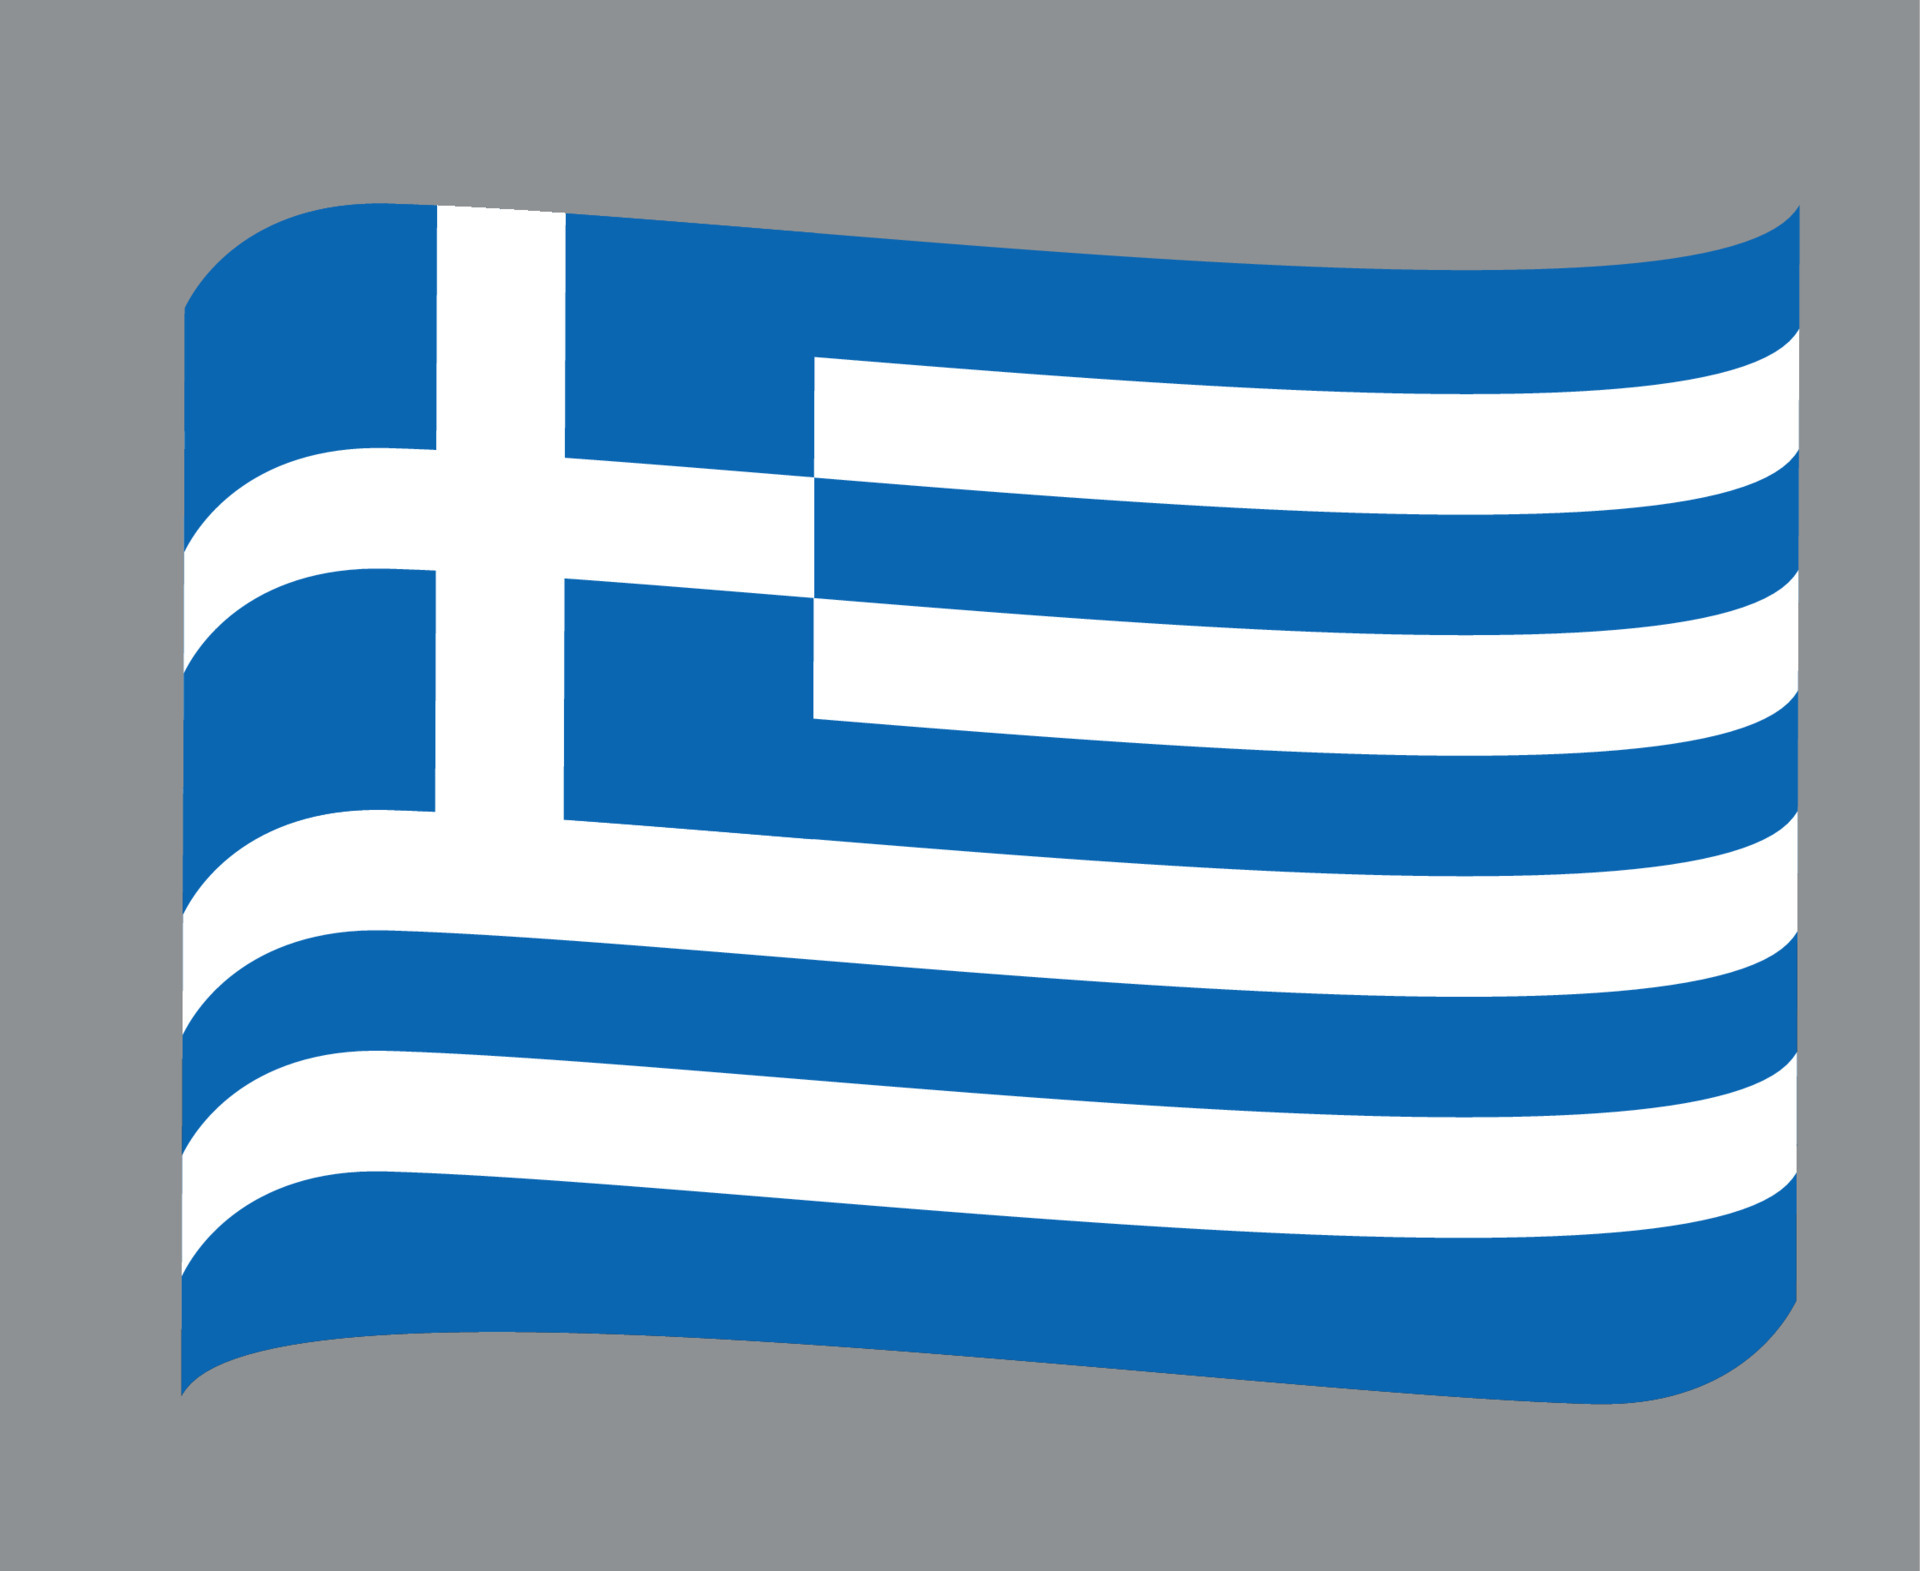 https://static.vecteezy.com/ti/gratis-vektor/p3/5835389-griechenland-flagge-nationales-europa-emblem-symbol-symbol-illustration-abstraktes-design-element-kostenlos-vektor.jpg